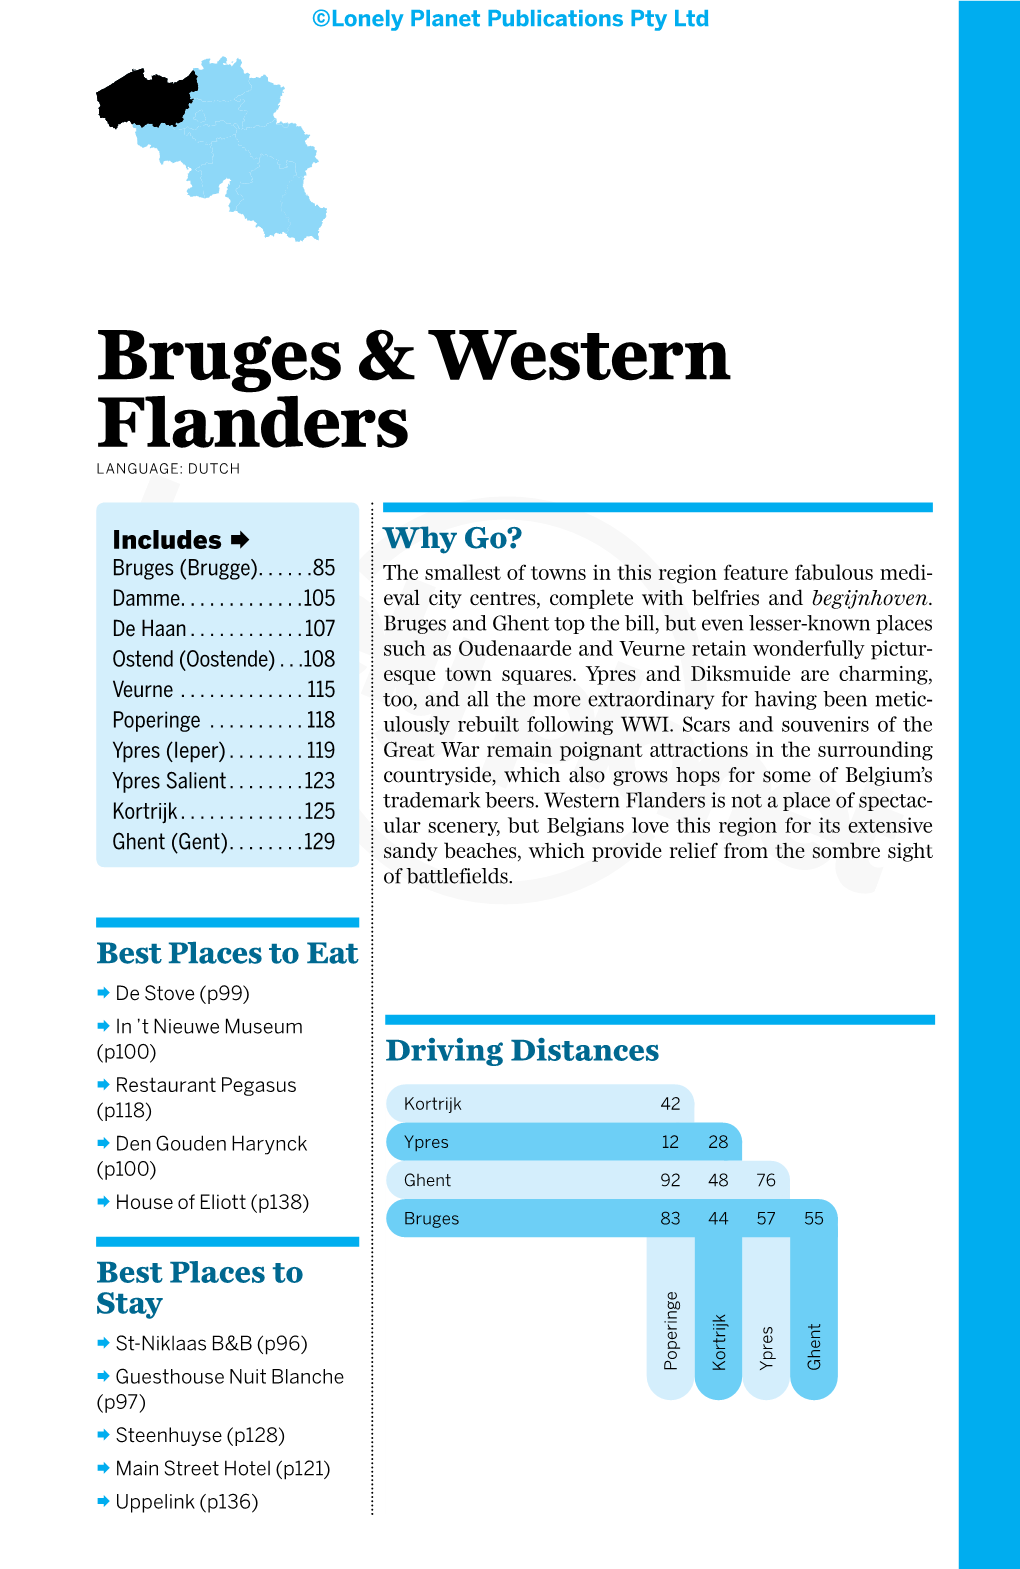 Bruges & Western Flanders